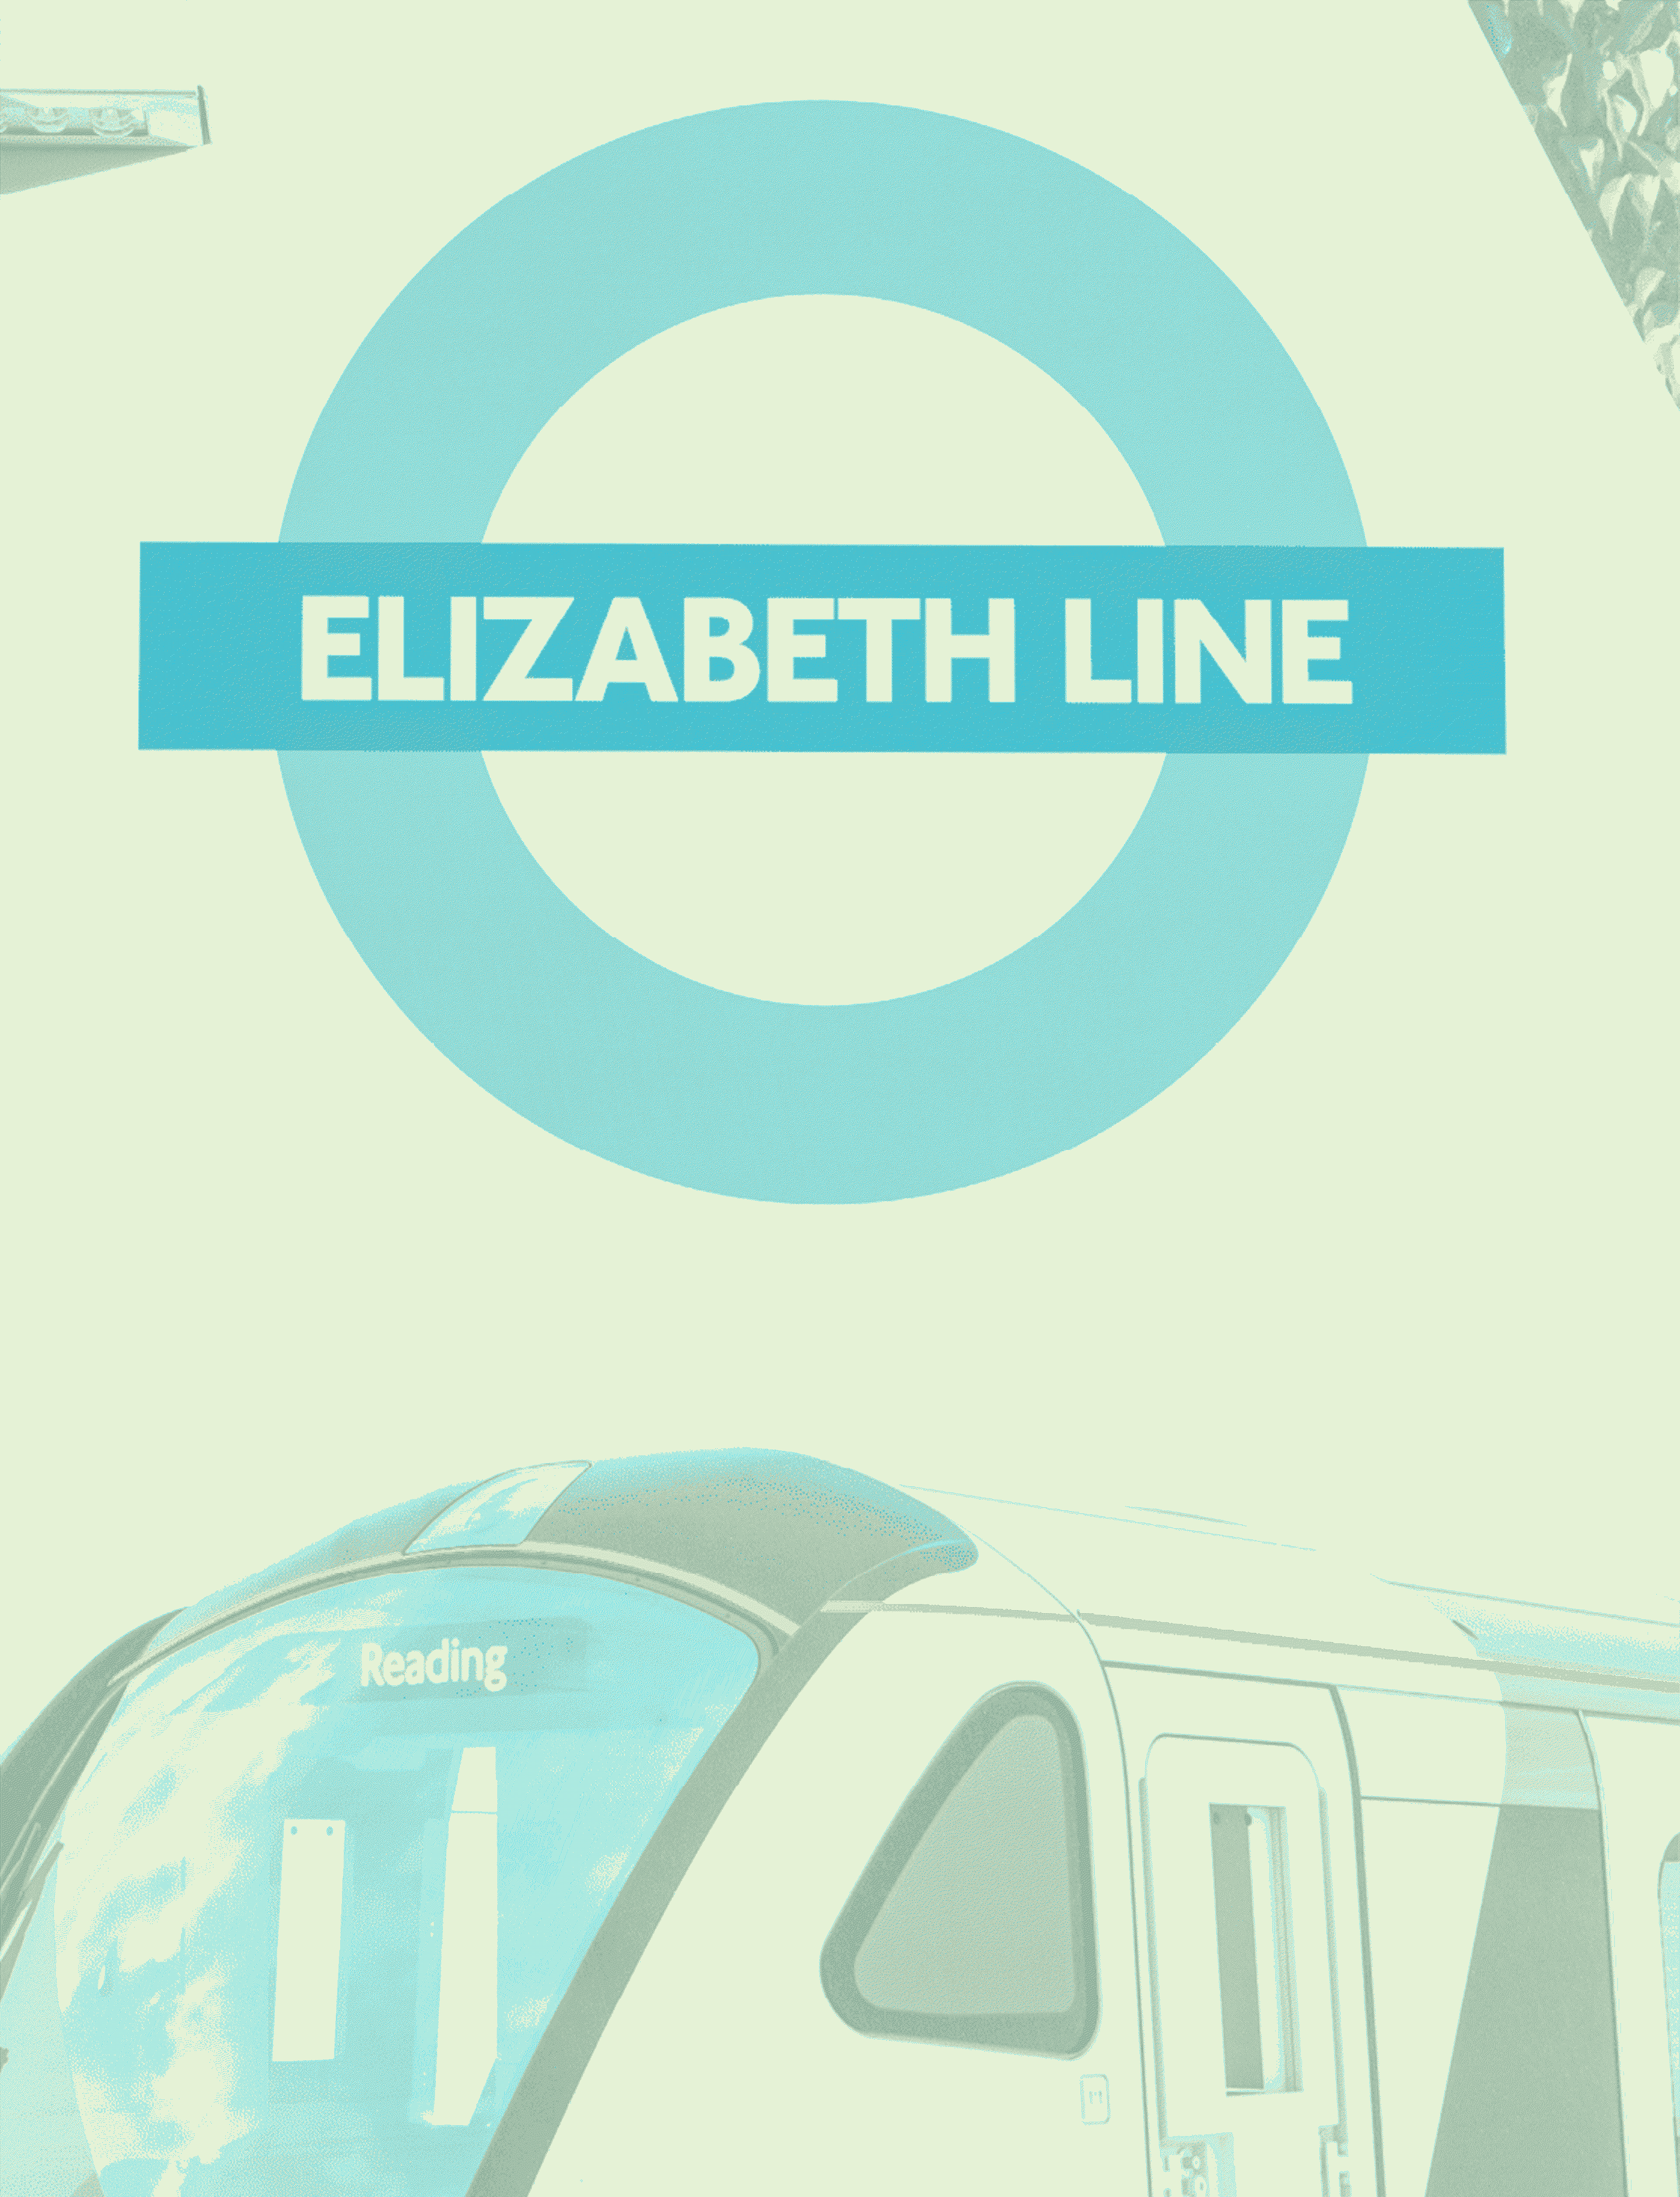 Eliazebeth Line Portrait